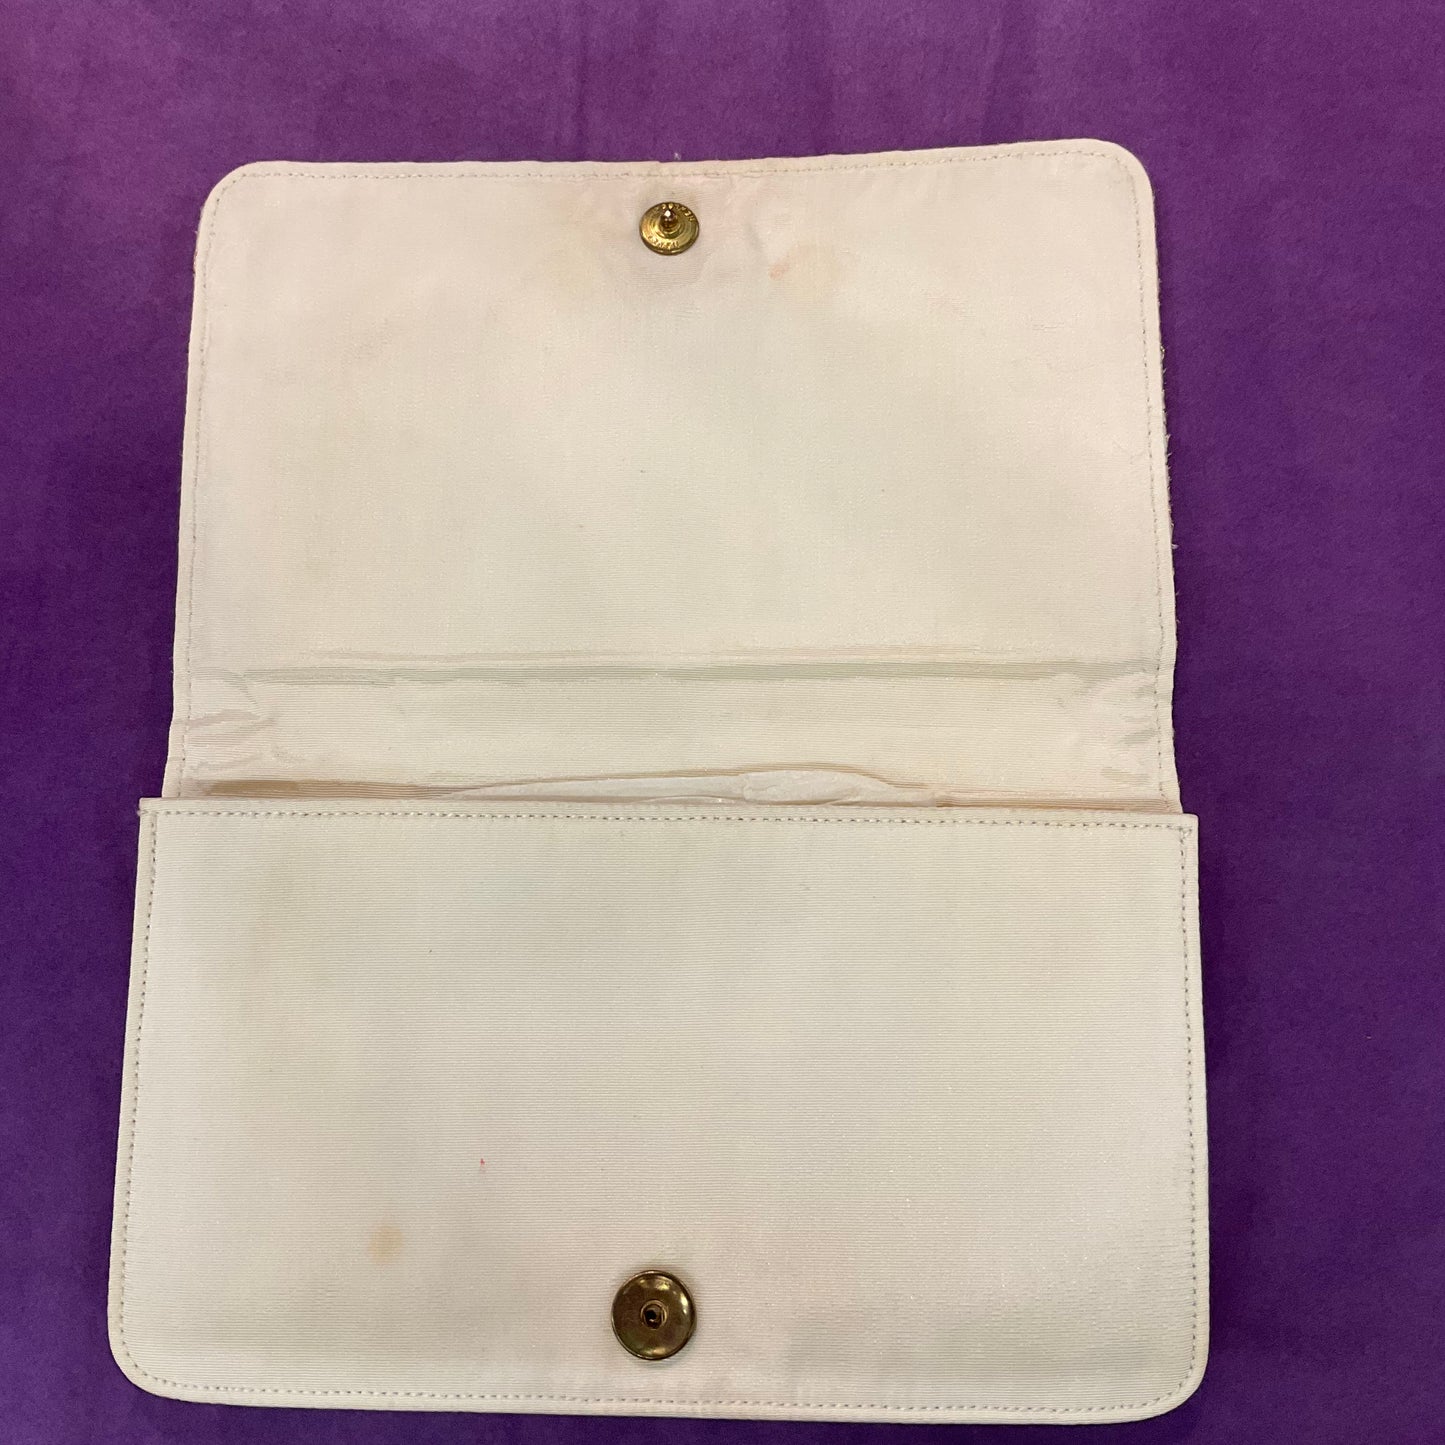 Vintage 1950s Ivory and Gold CFR Clutch Bag